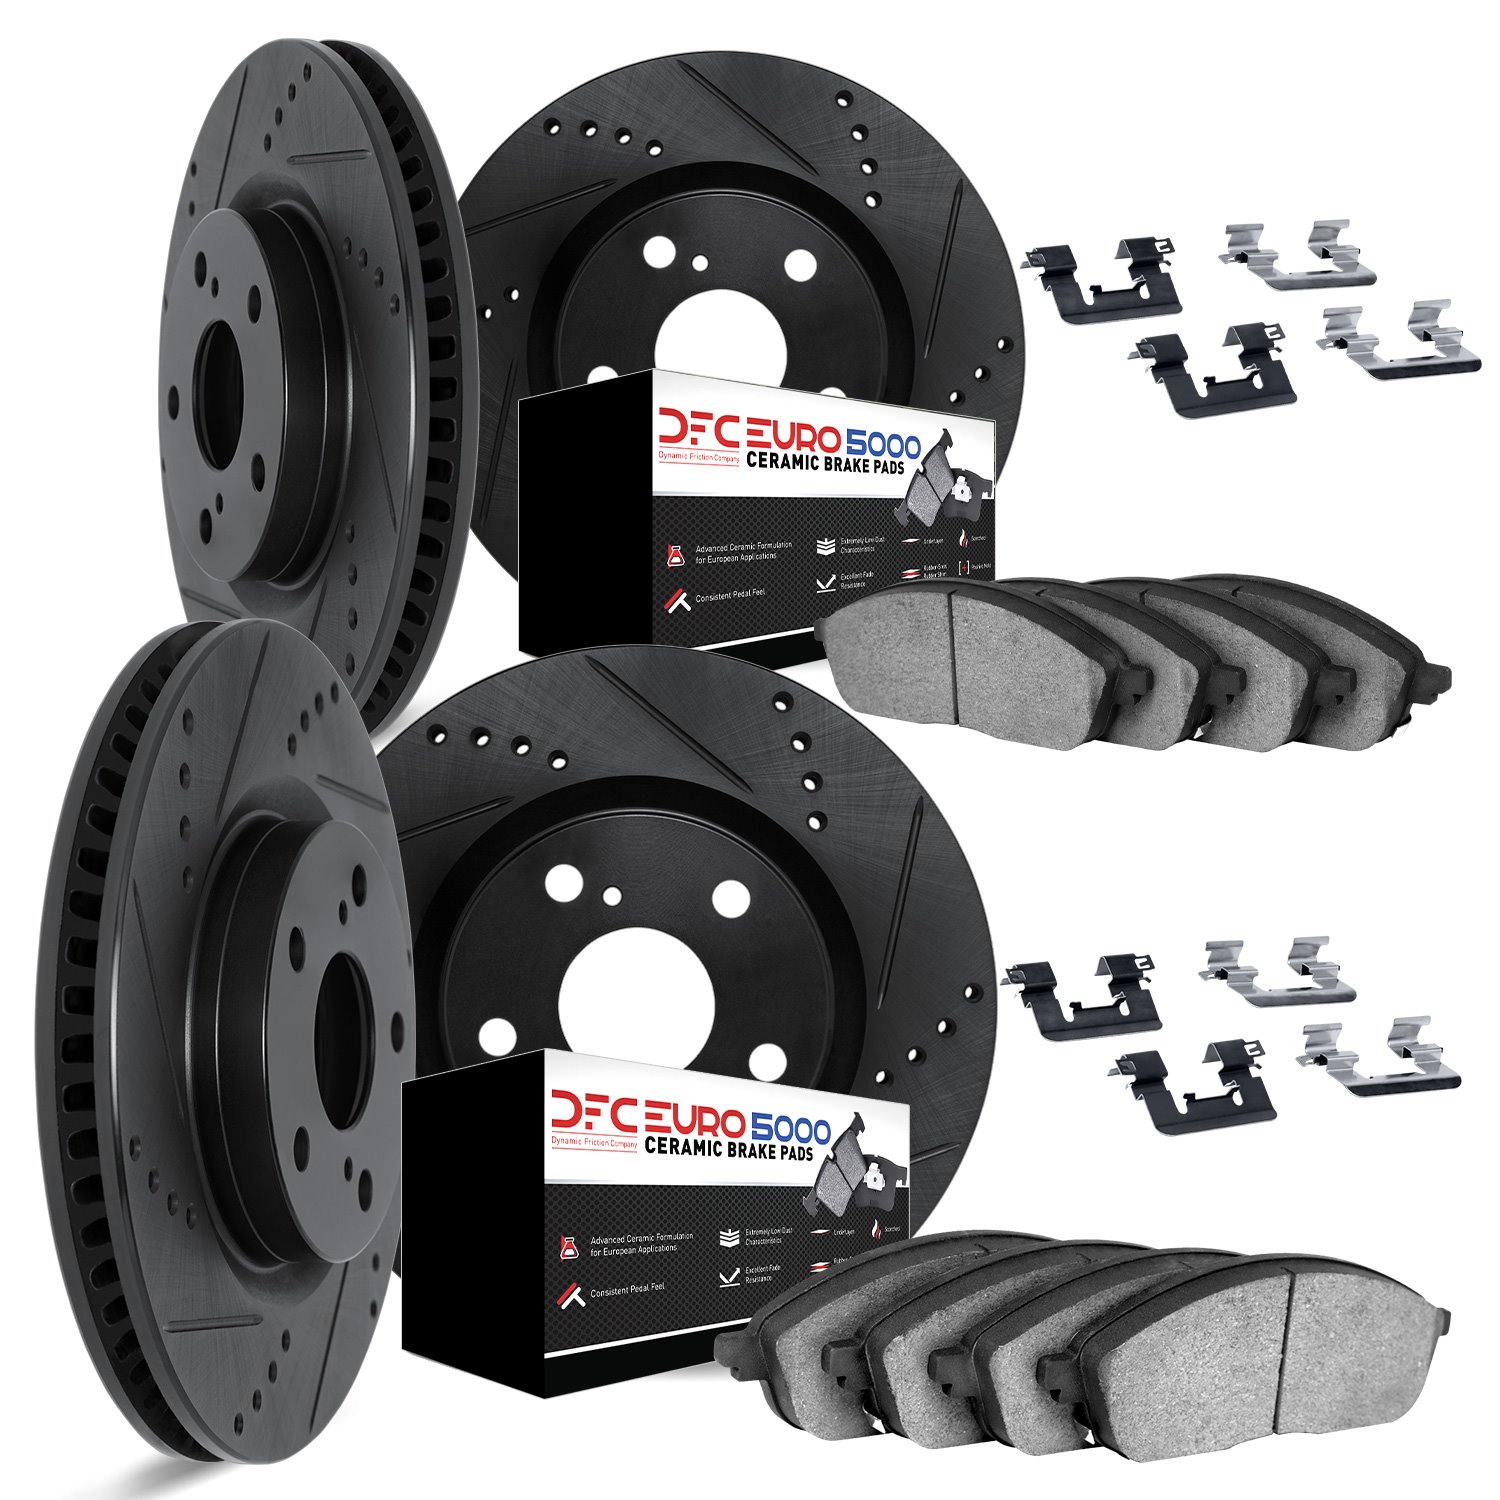 8614-42000 Drilled/Slotted Brake Rotors w/5000 Euro Ceramic Brake Pads Kit & Hardware [Black], 2006-2010 Mopar, Position: Front